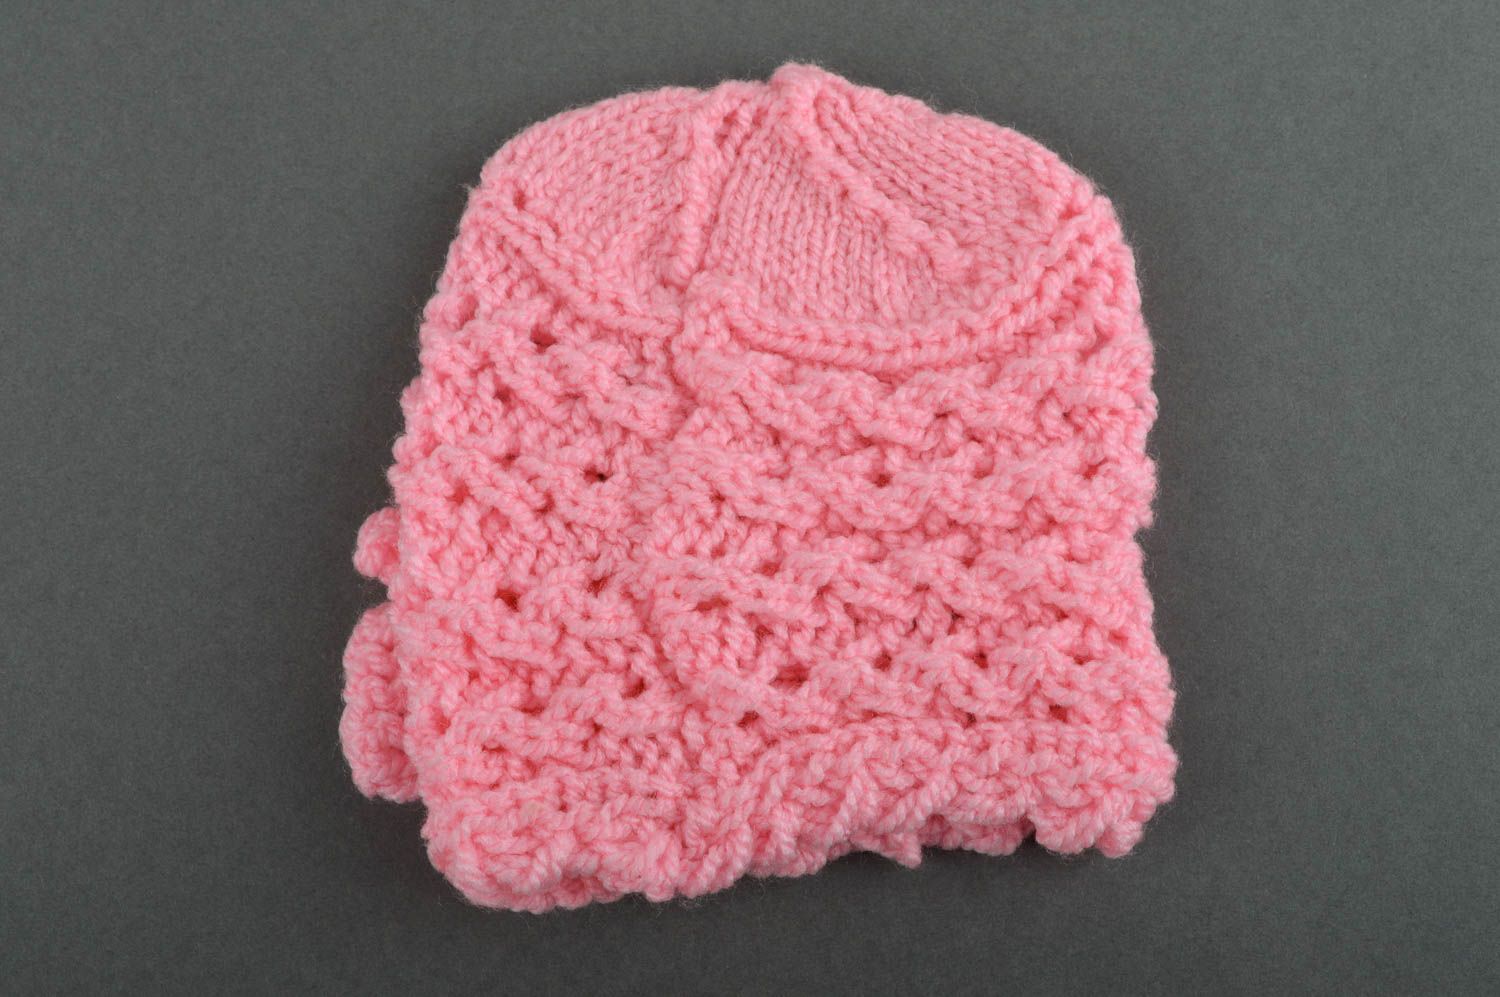 Hand-crochet baby hat hats with flower openwork hat for children baby present photo 4